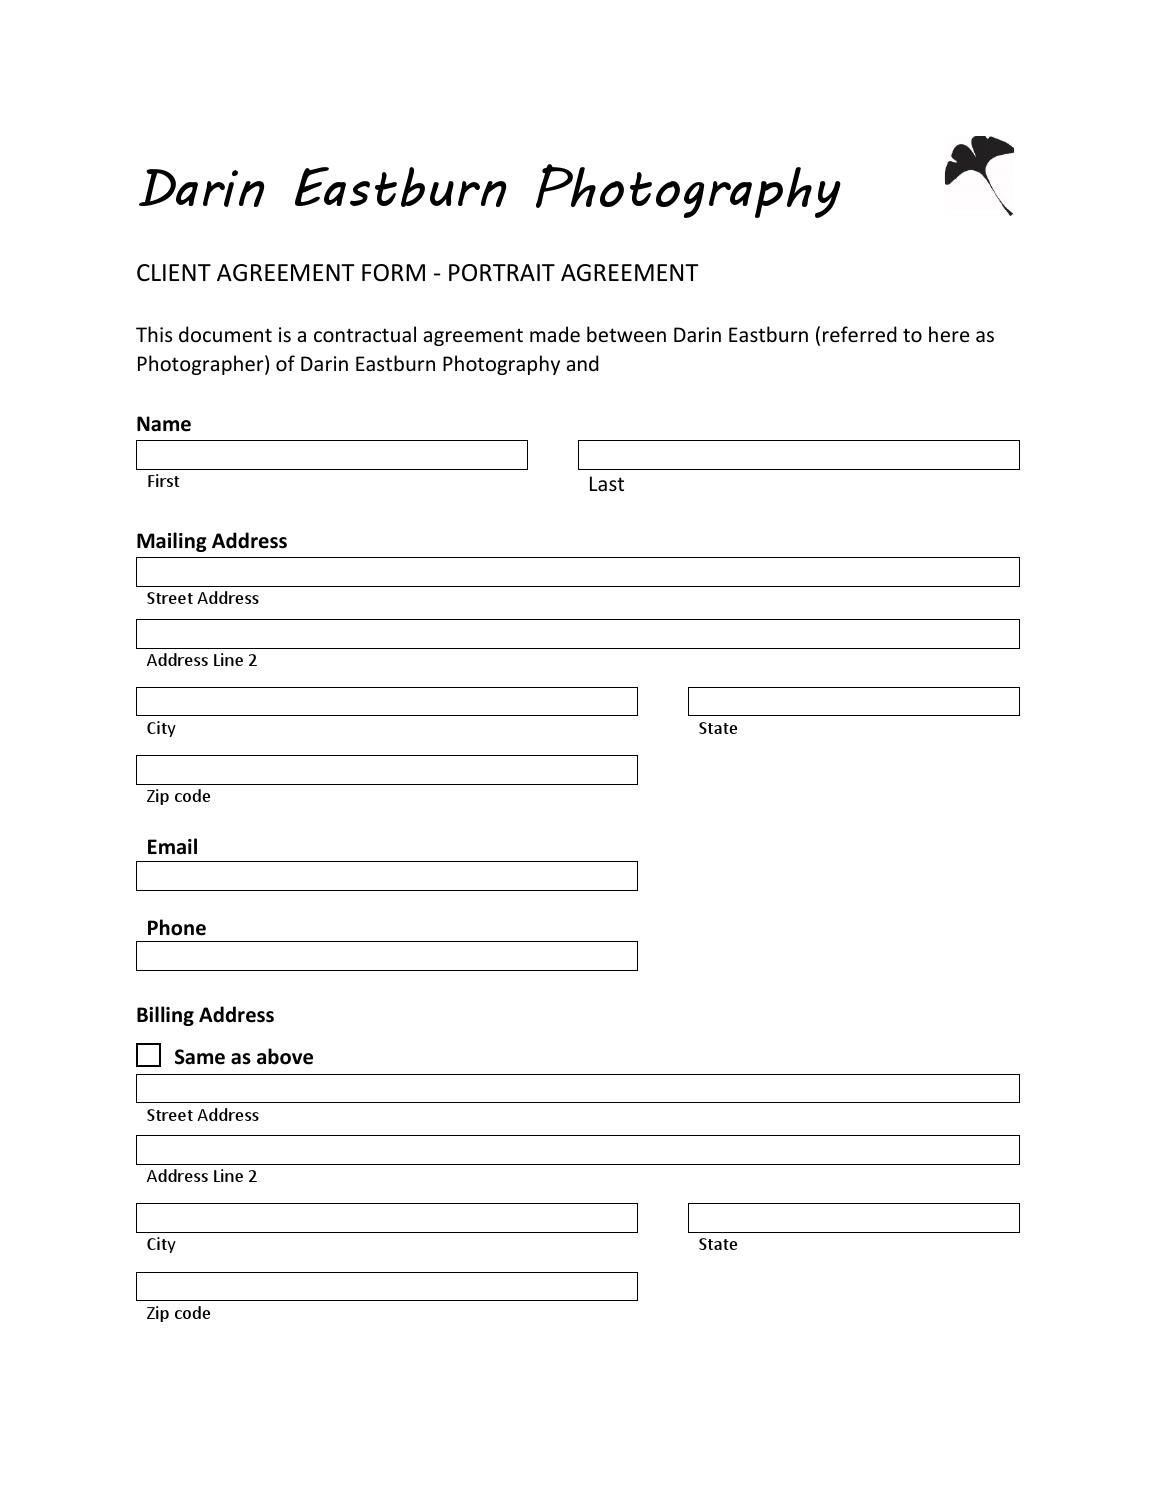 Portrait Agreement Form Client Portrait Agreement Darin Eastburn Photography Issuu